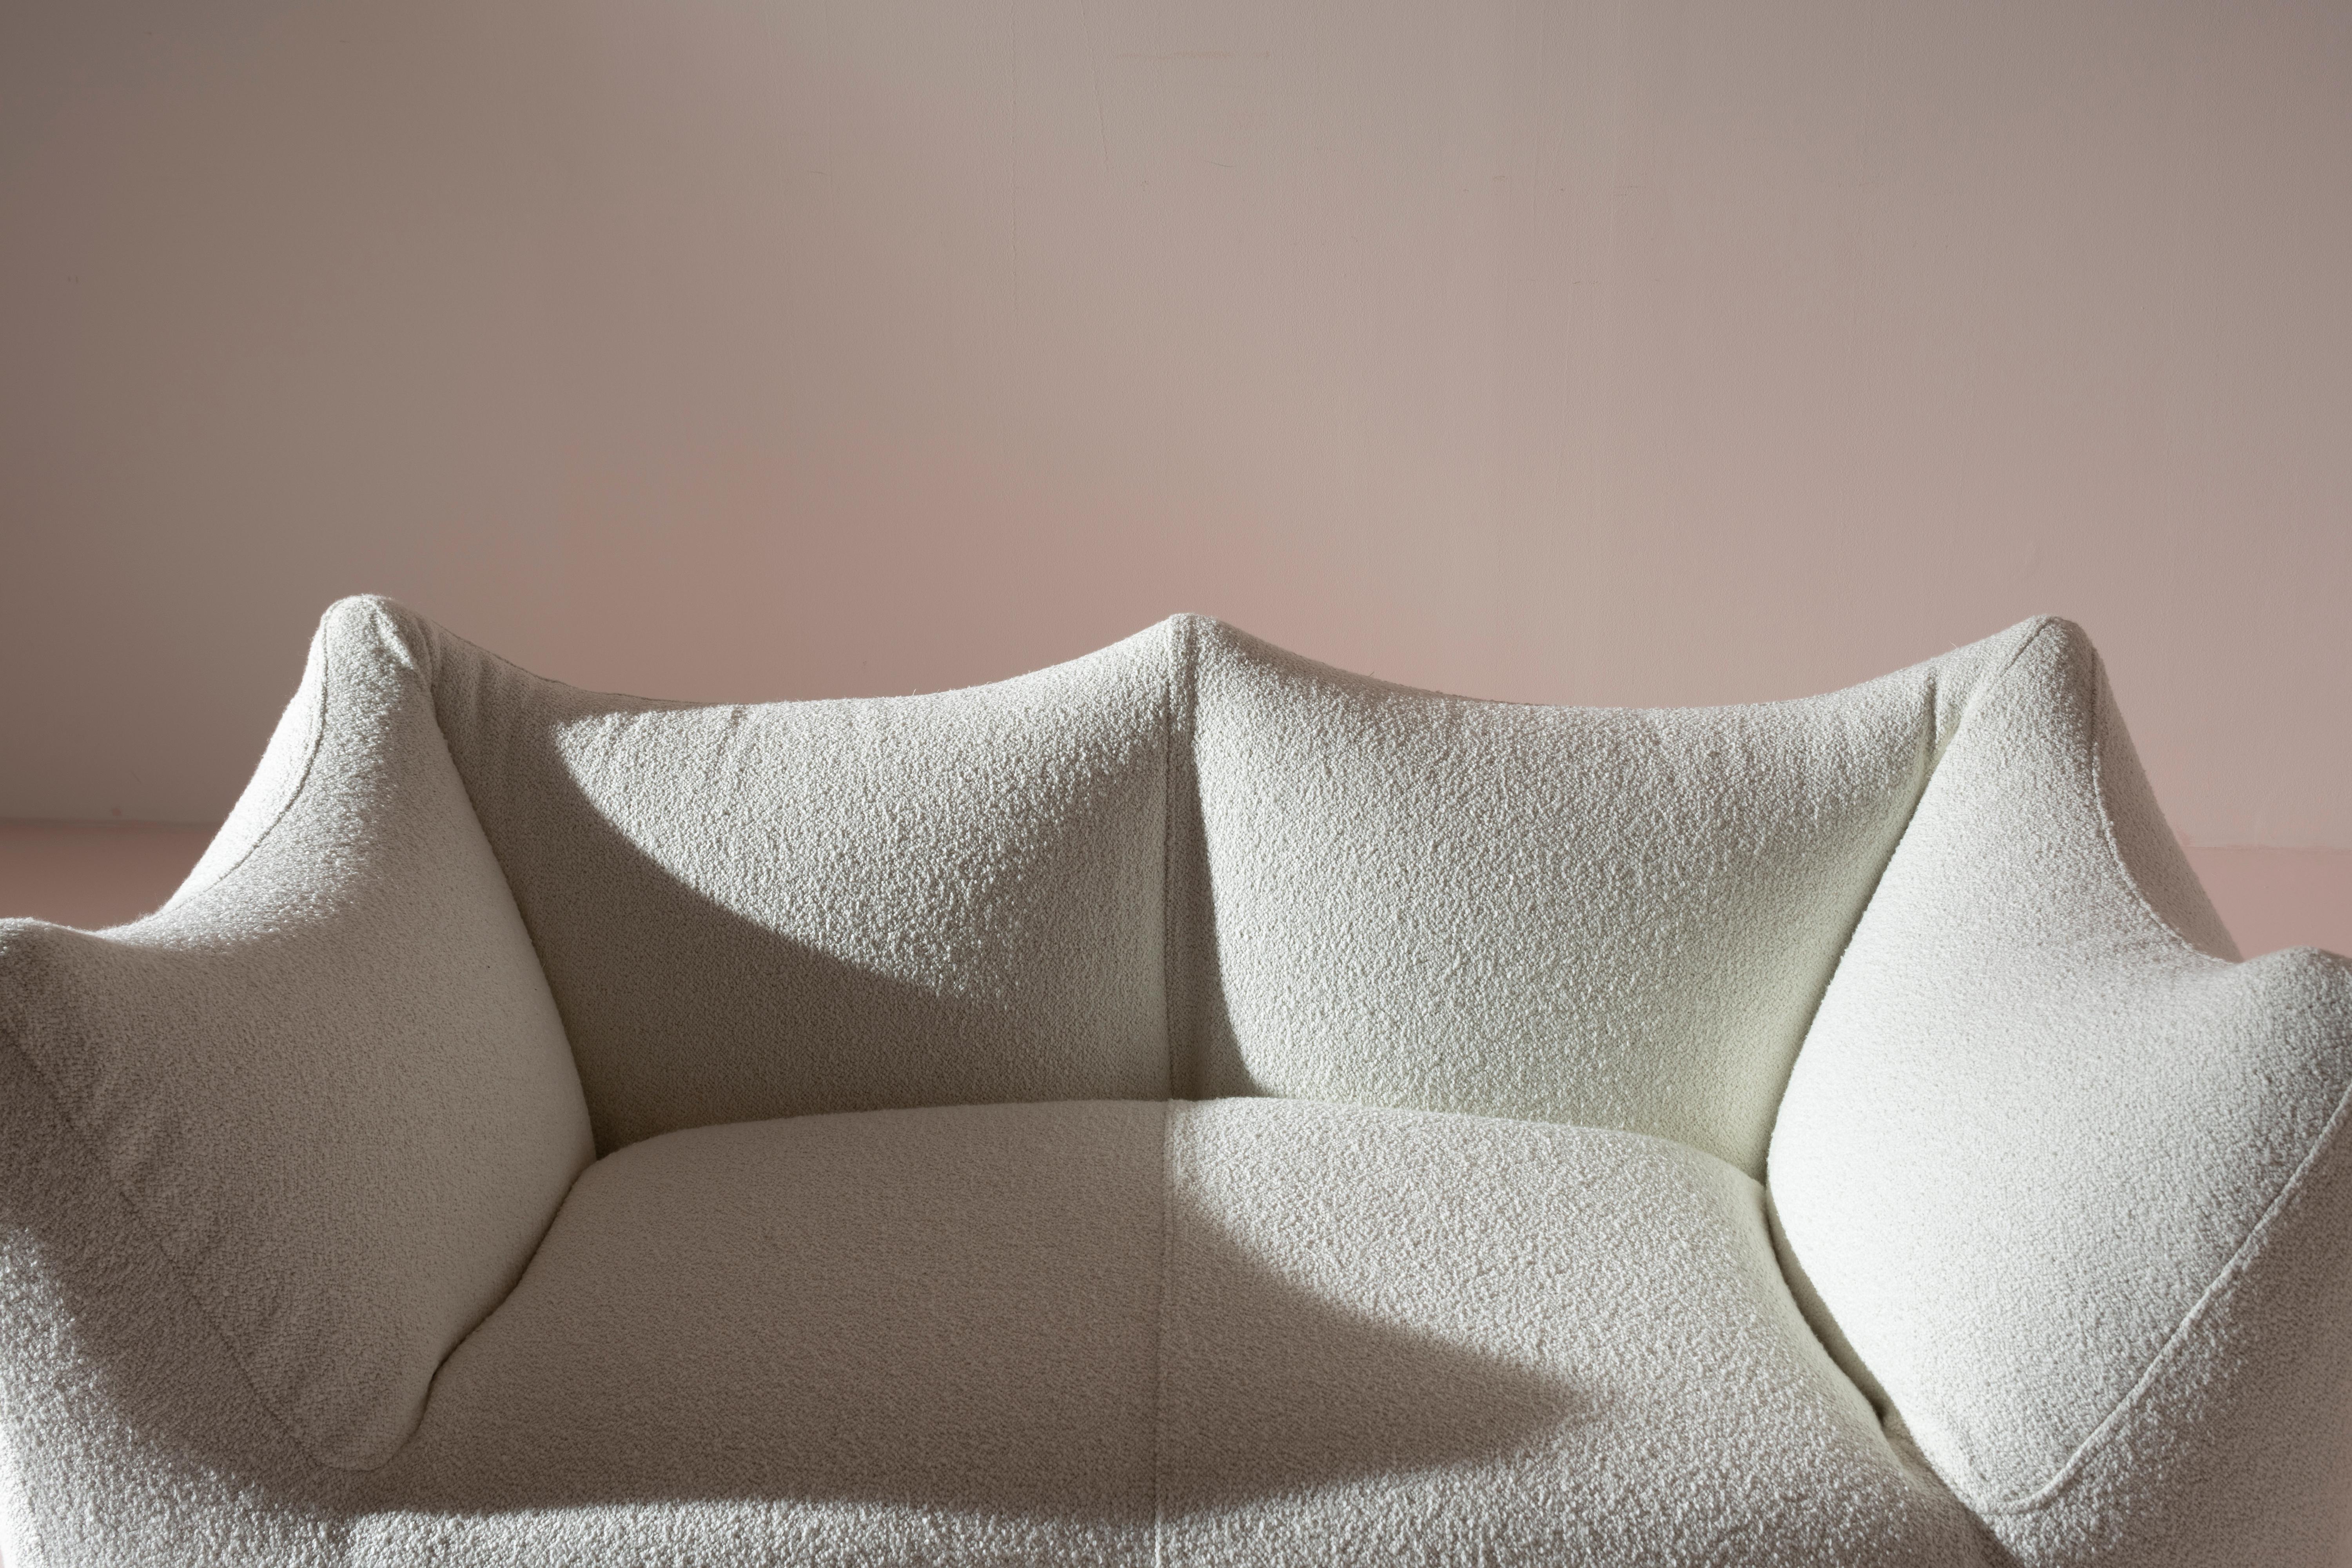 Mario Bellini two sofas Model 